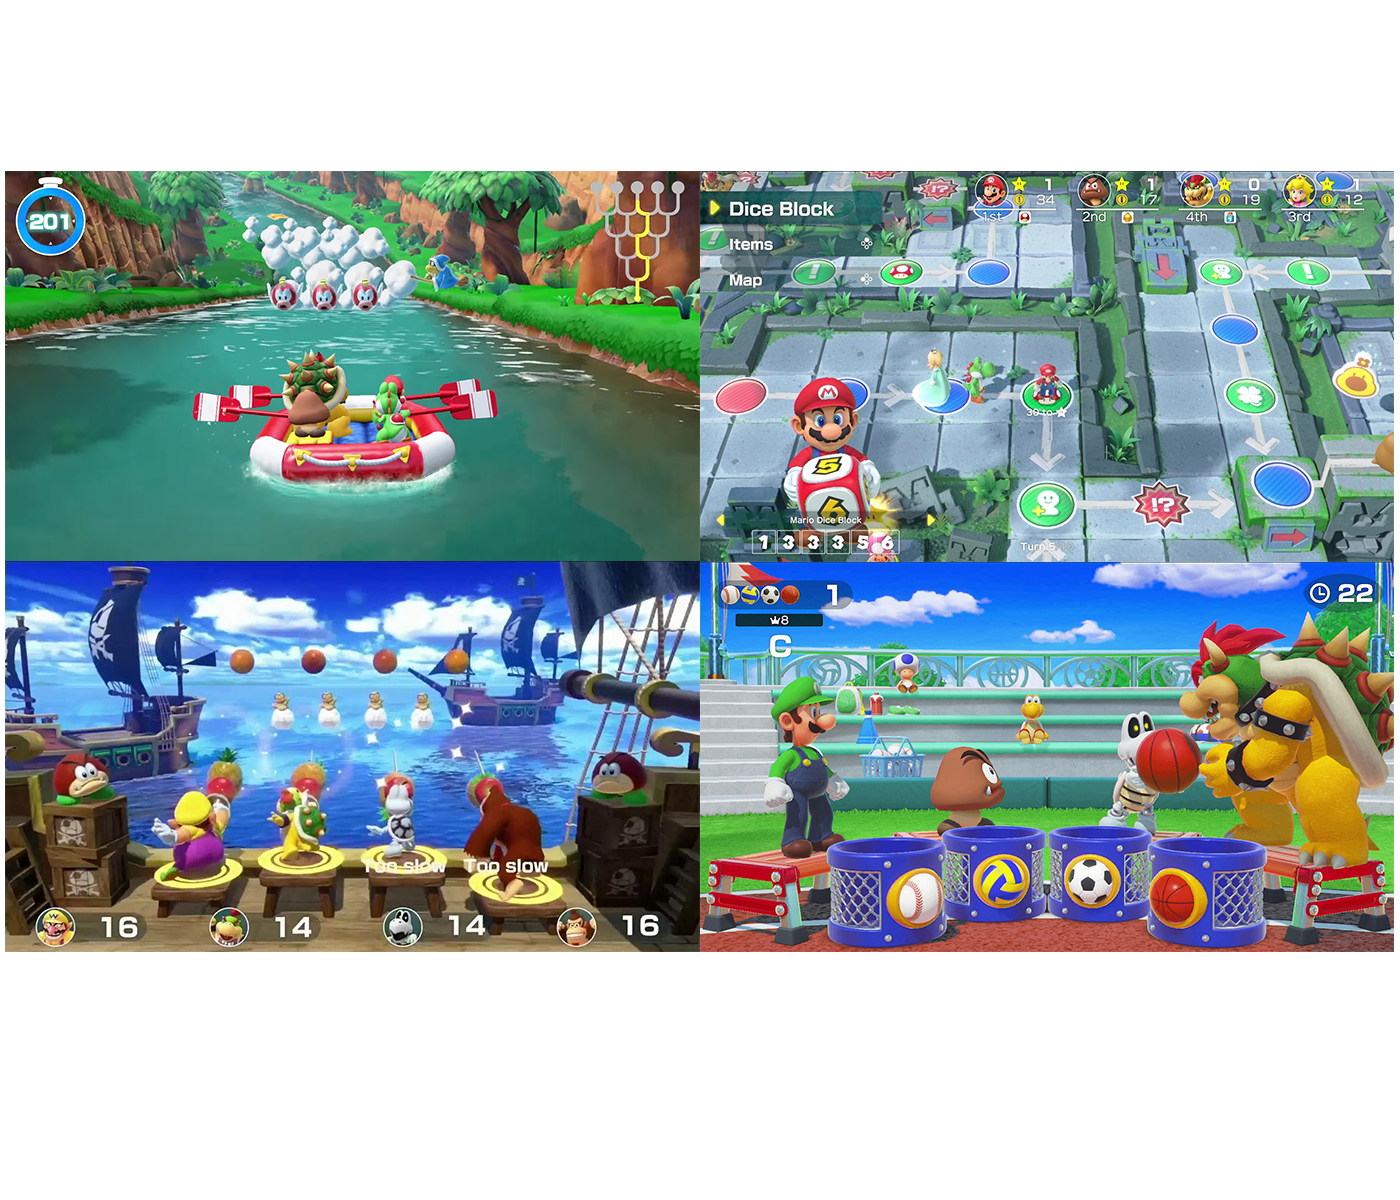 Nintendo Switch Mario Party Bundle: Super Mario Party, Mario Kart 8 Deluxe and Nintendo Switch 32GB Console with Neon Red and Blue Joy-Con - image 5 of 9